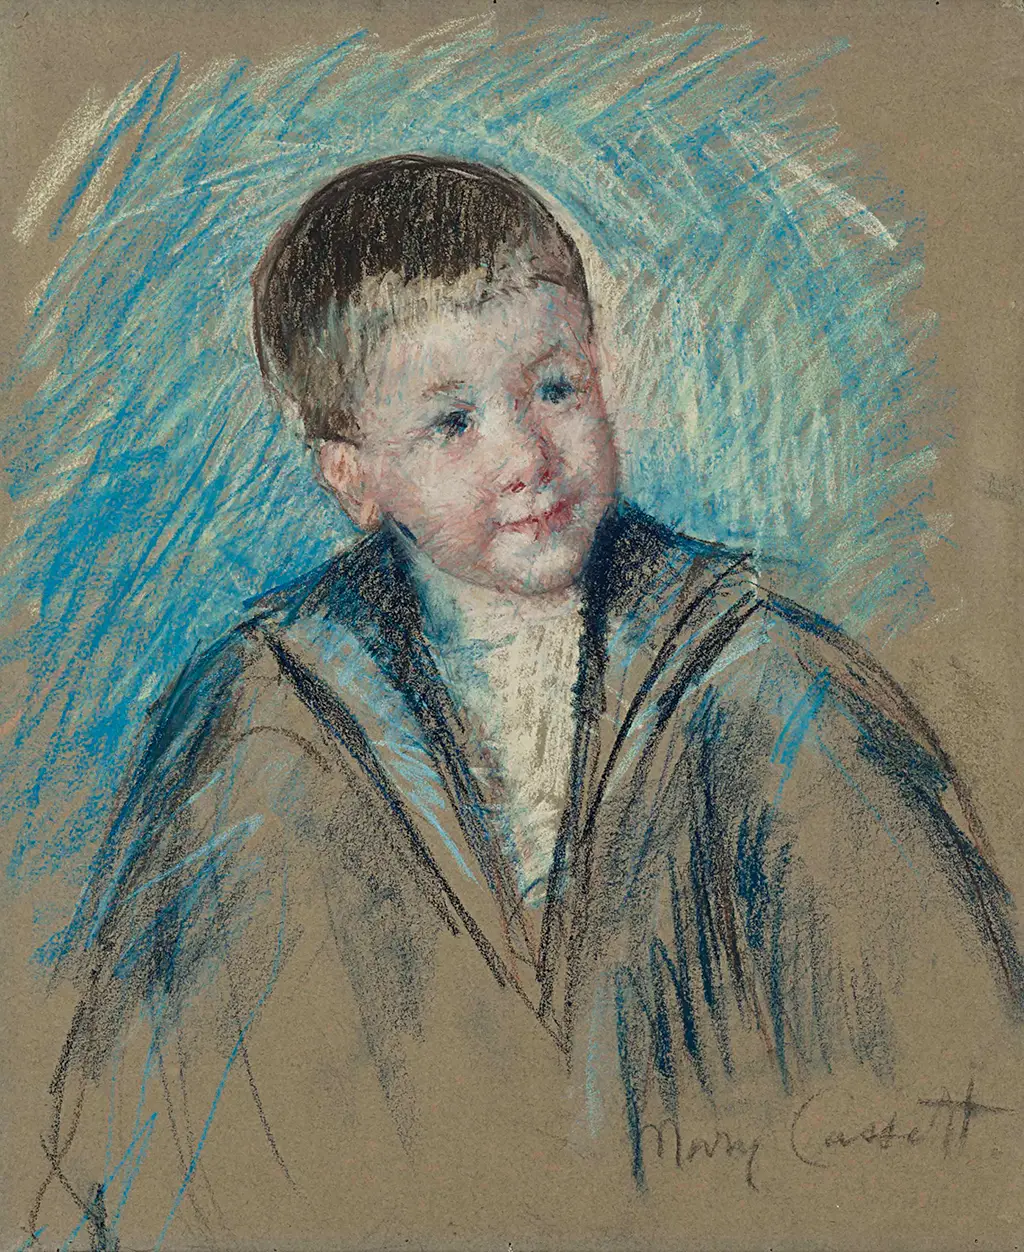 Mary Cassatt in Detail